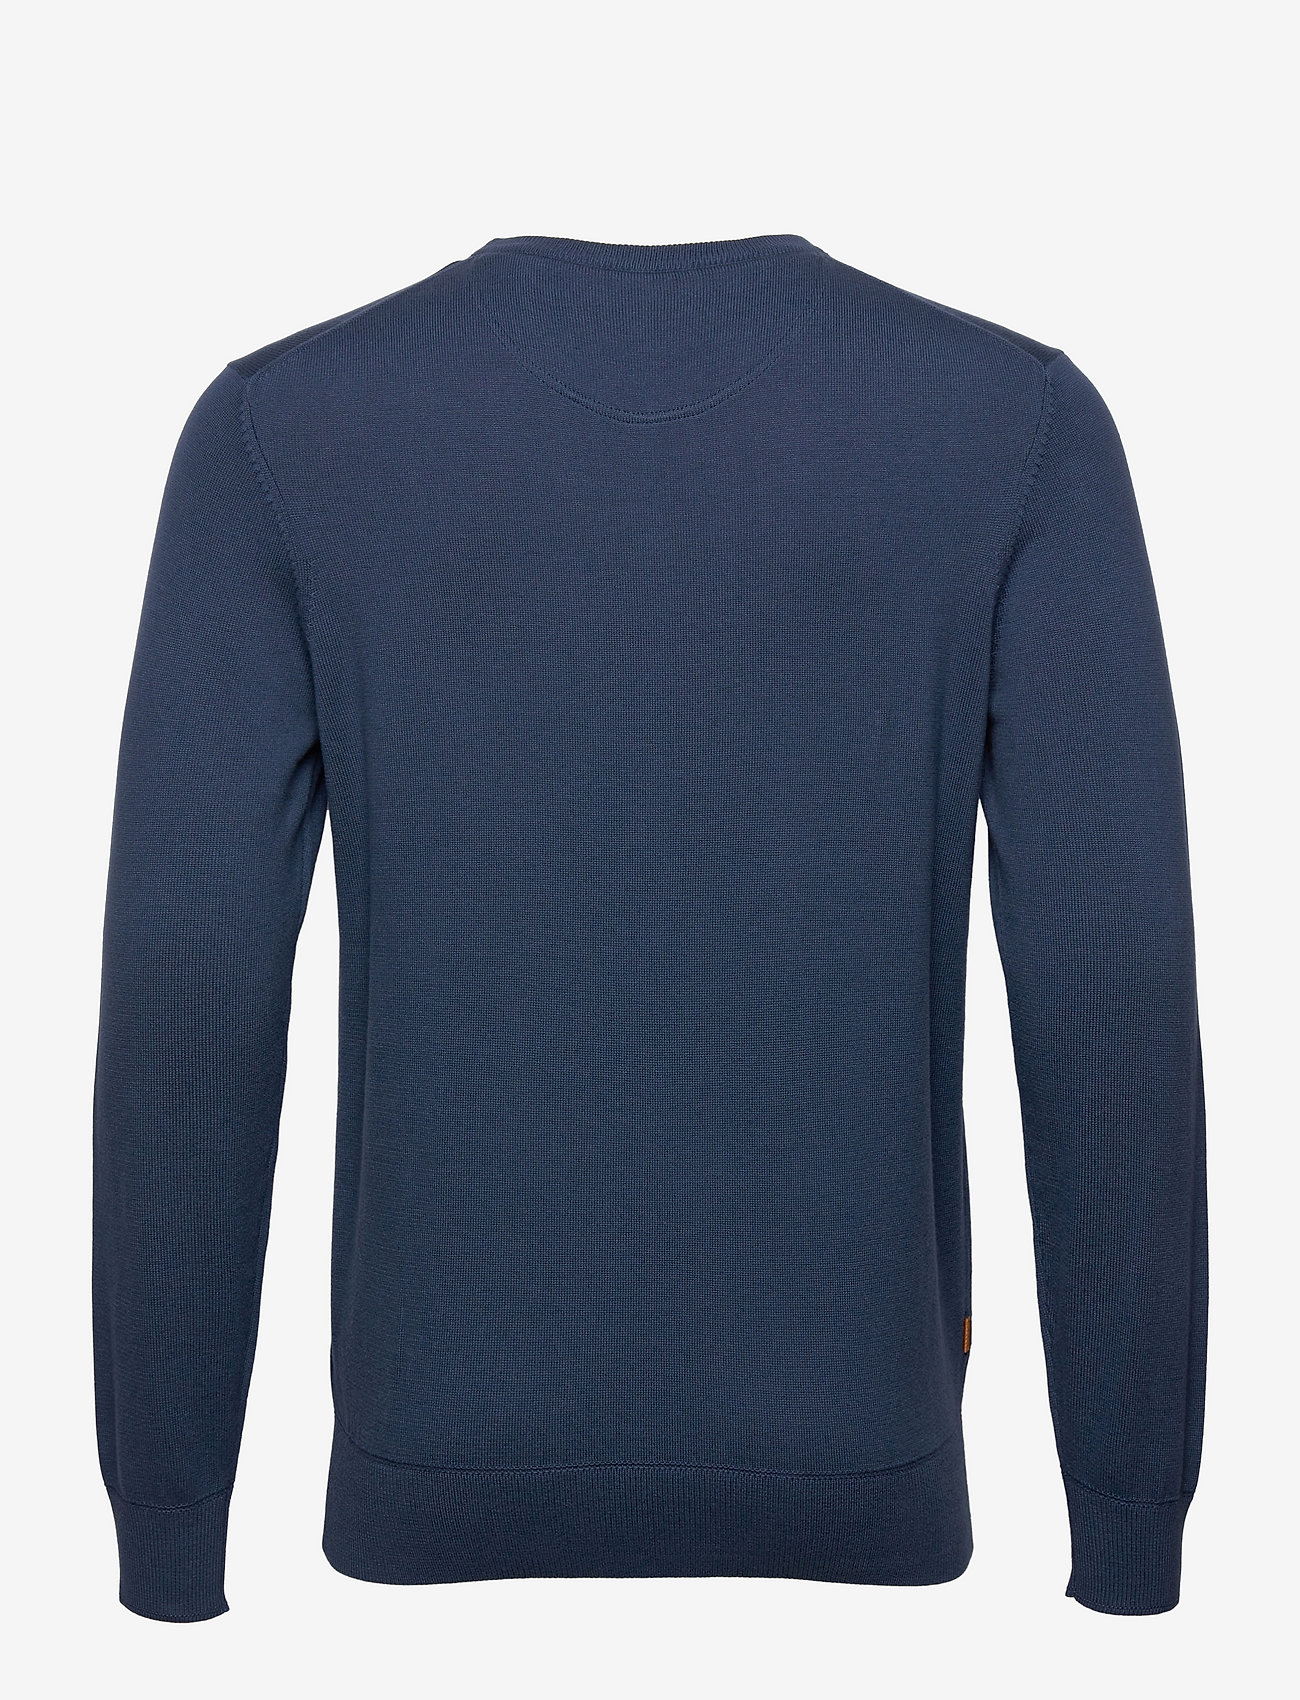 Timberland - WILLIAMS RIVER Cotton YD Sweater DARK DENIM - basic shirts - dark denim - 1